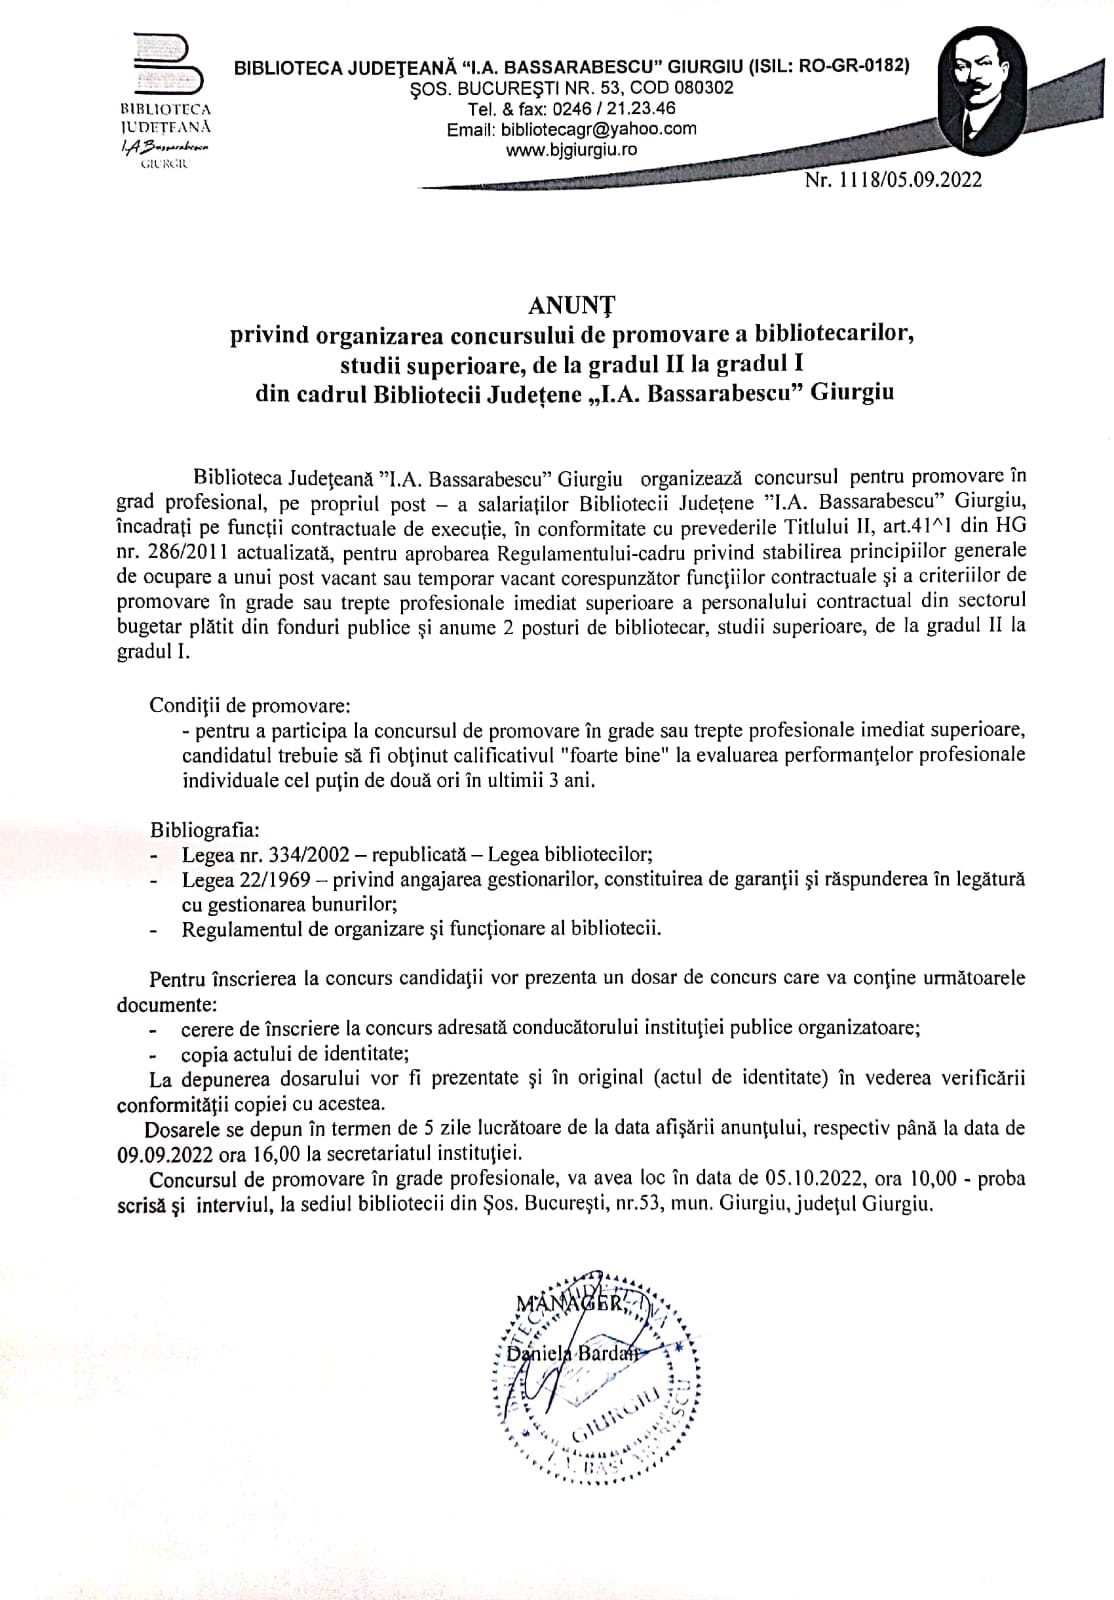 Silver Journey methane Buletin informativ – Biblioteca Judeteana "I.A. Bassarabescu" Giurgiu